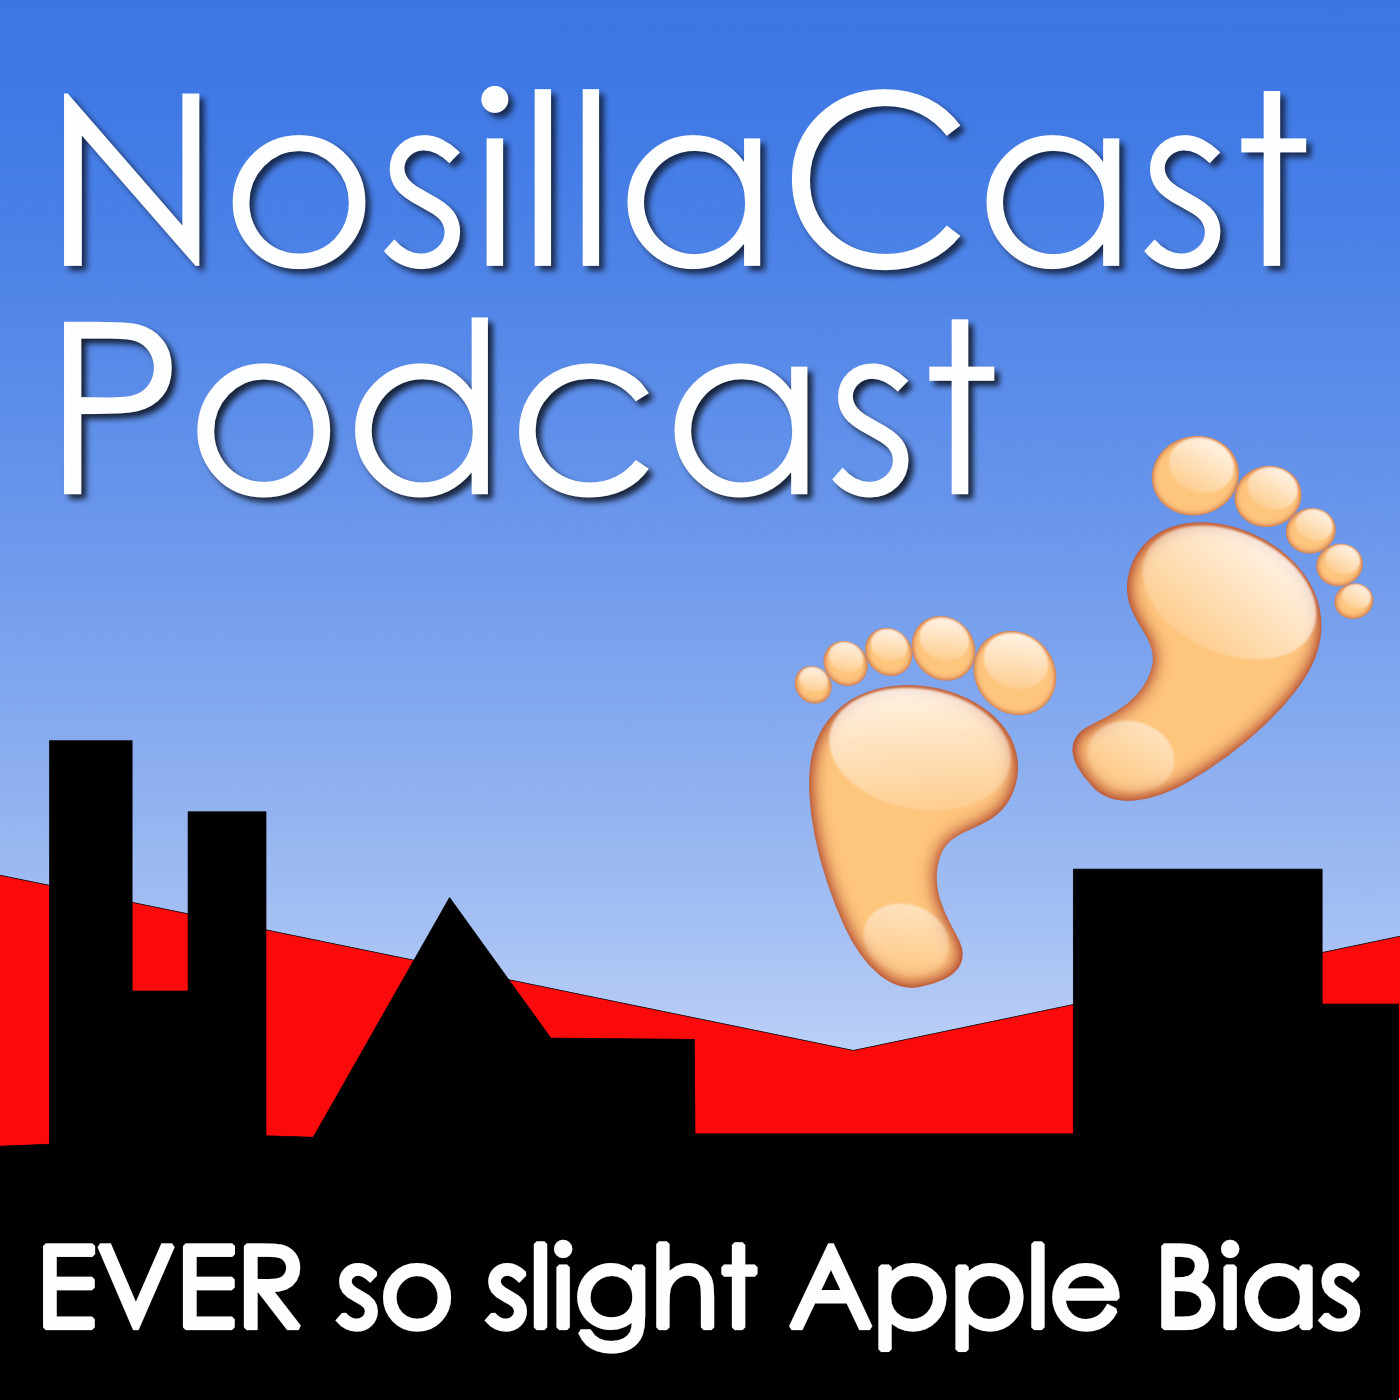 NosillaCast Podcast art